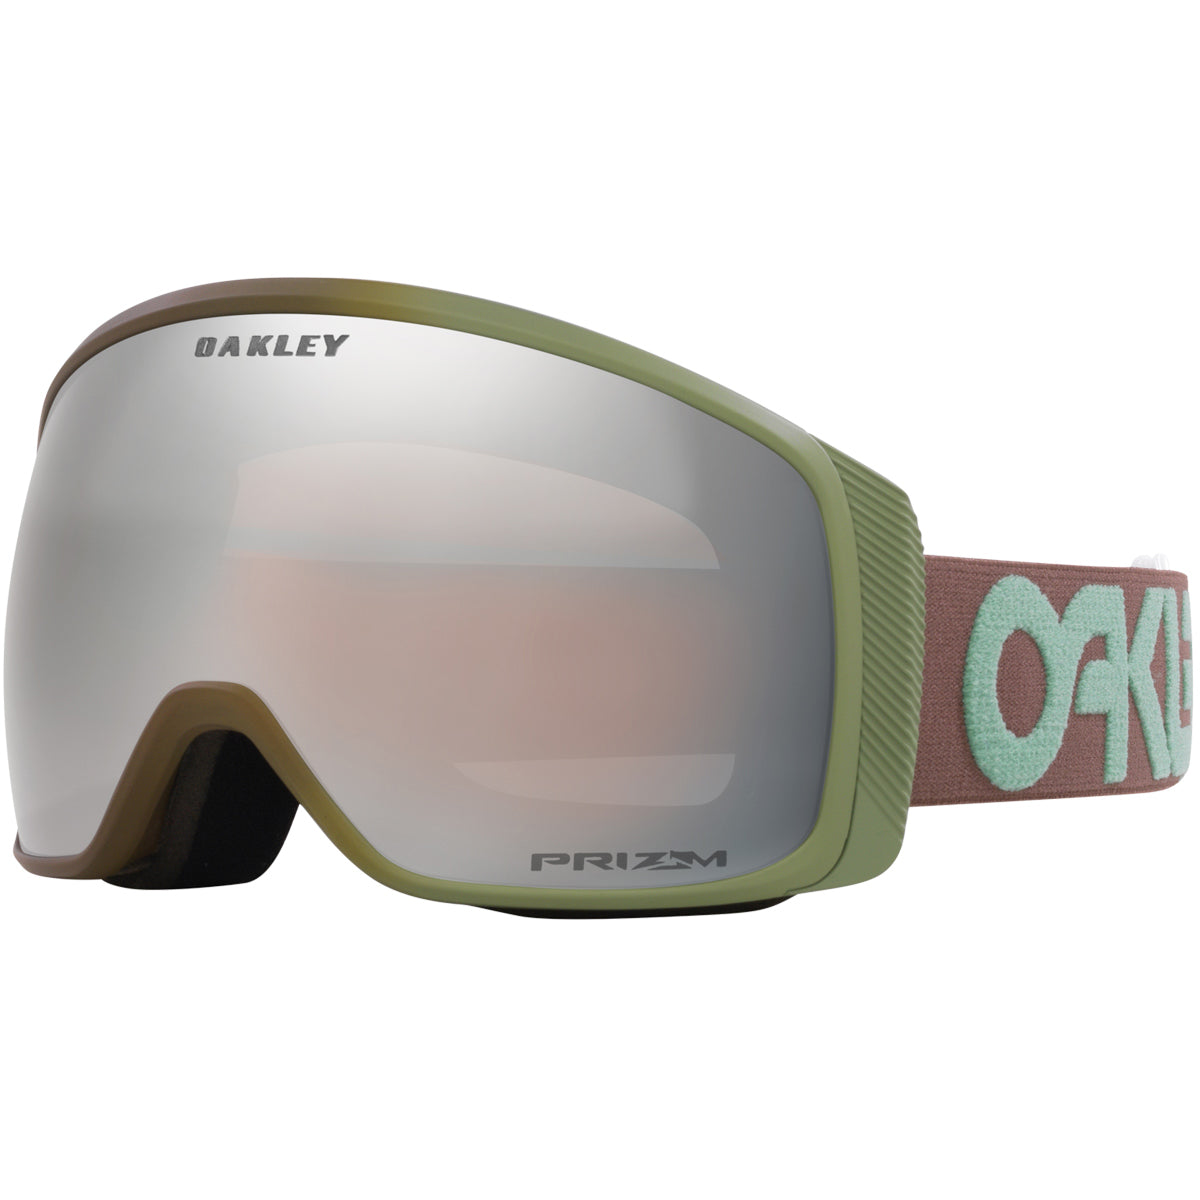 Oakley Flight Tracker Snowboard Goggles - Jade Carafe/Prizm Black Iridium image 1